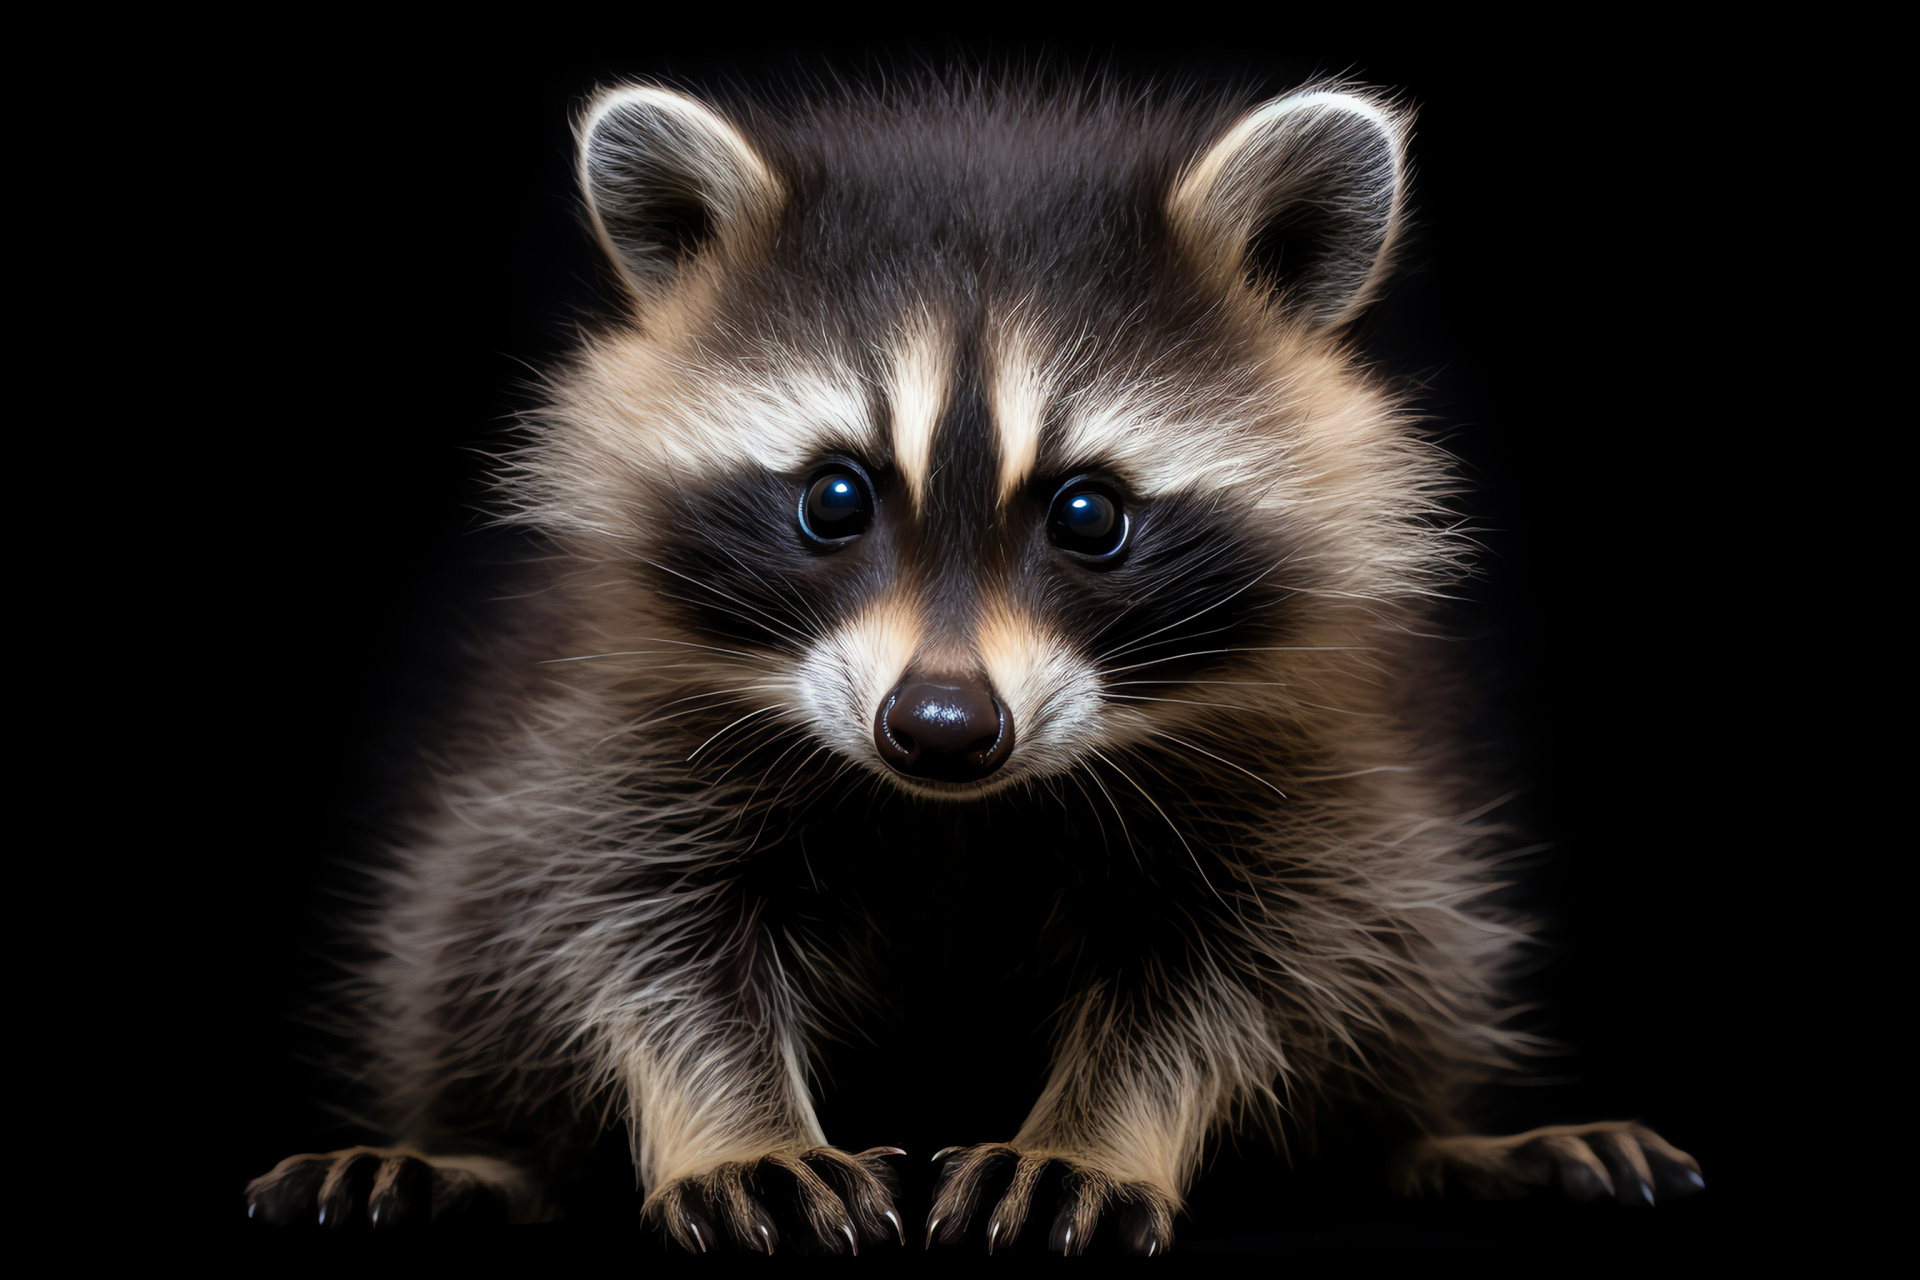 Raccoon family, Wildlife mammals, woodland creatures, nocturnal animals, natural habitat, HD Desktop Image